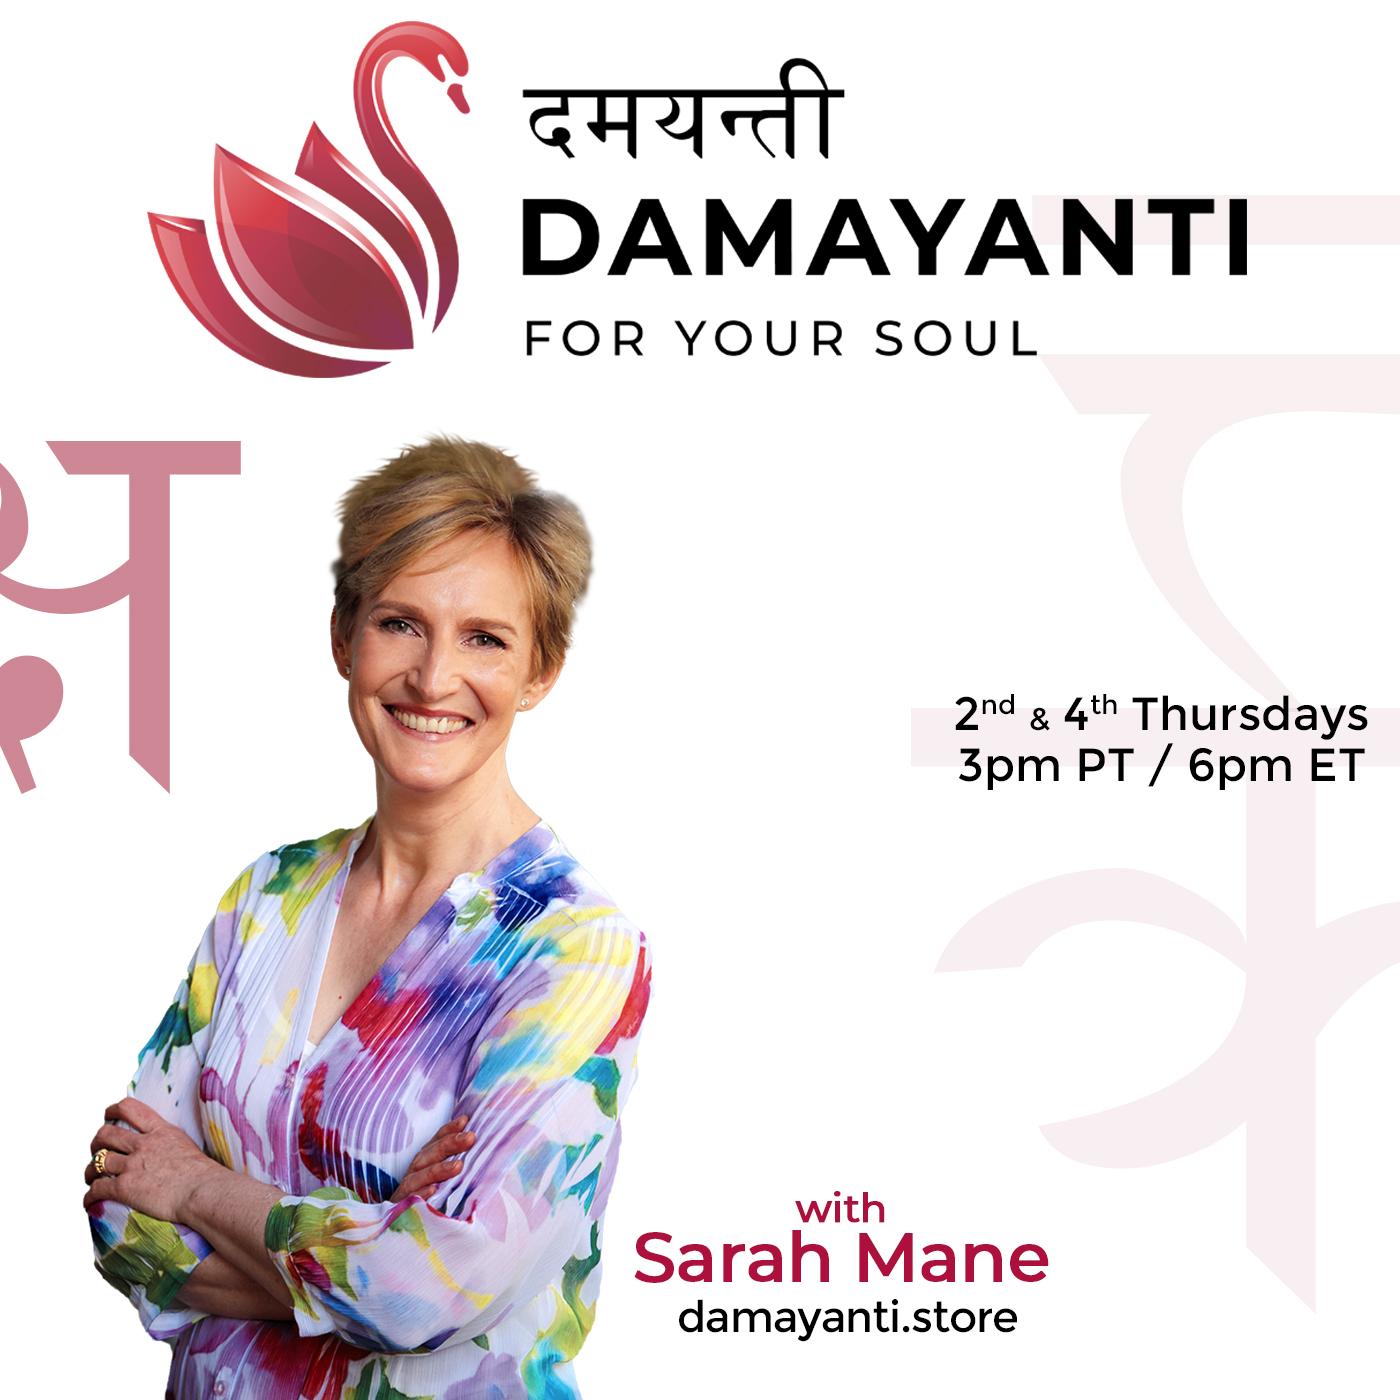 Damayanti: For Your Soul with Sarah Mane